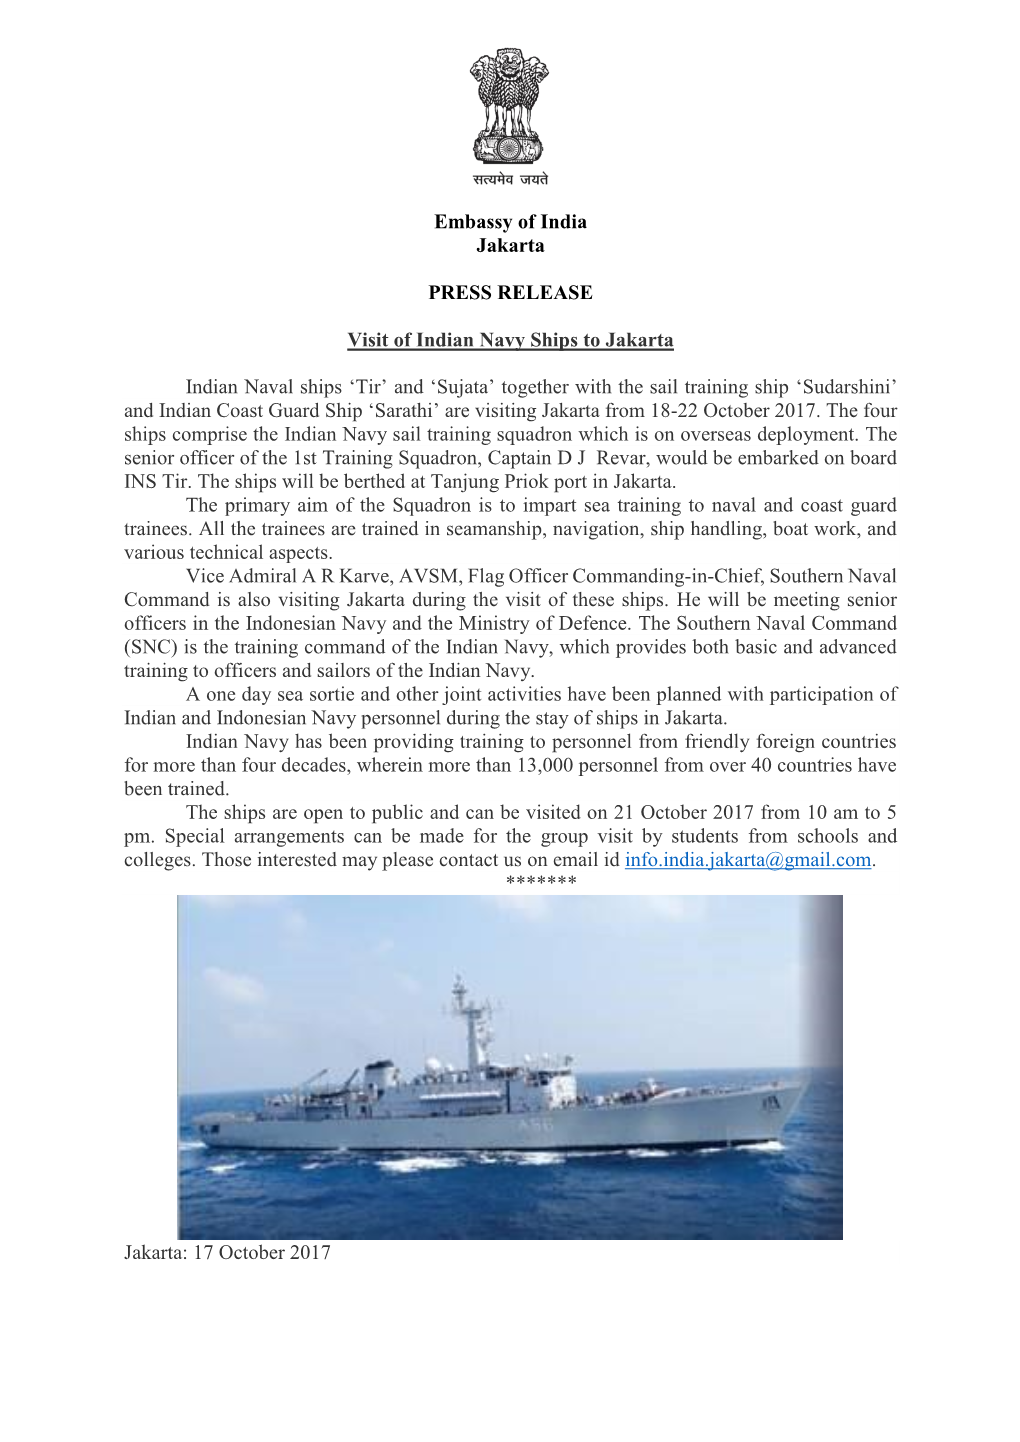 Visit of Indian Navy Ships to Jakarta